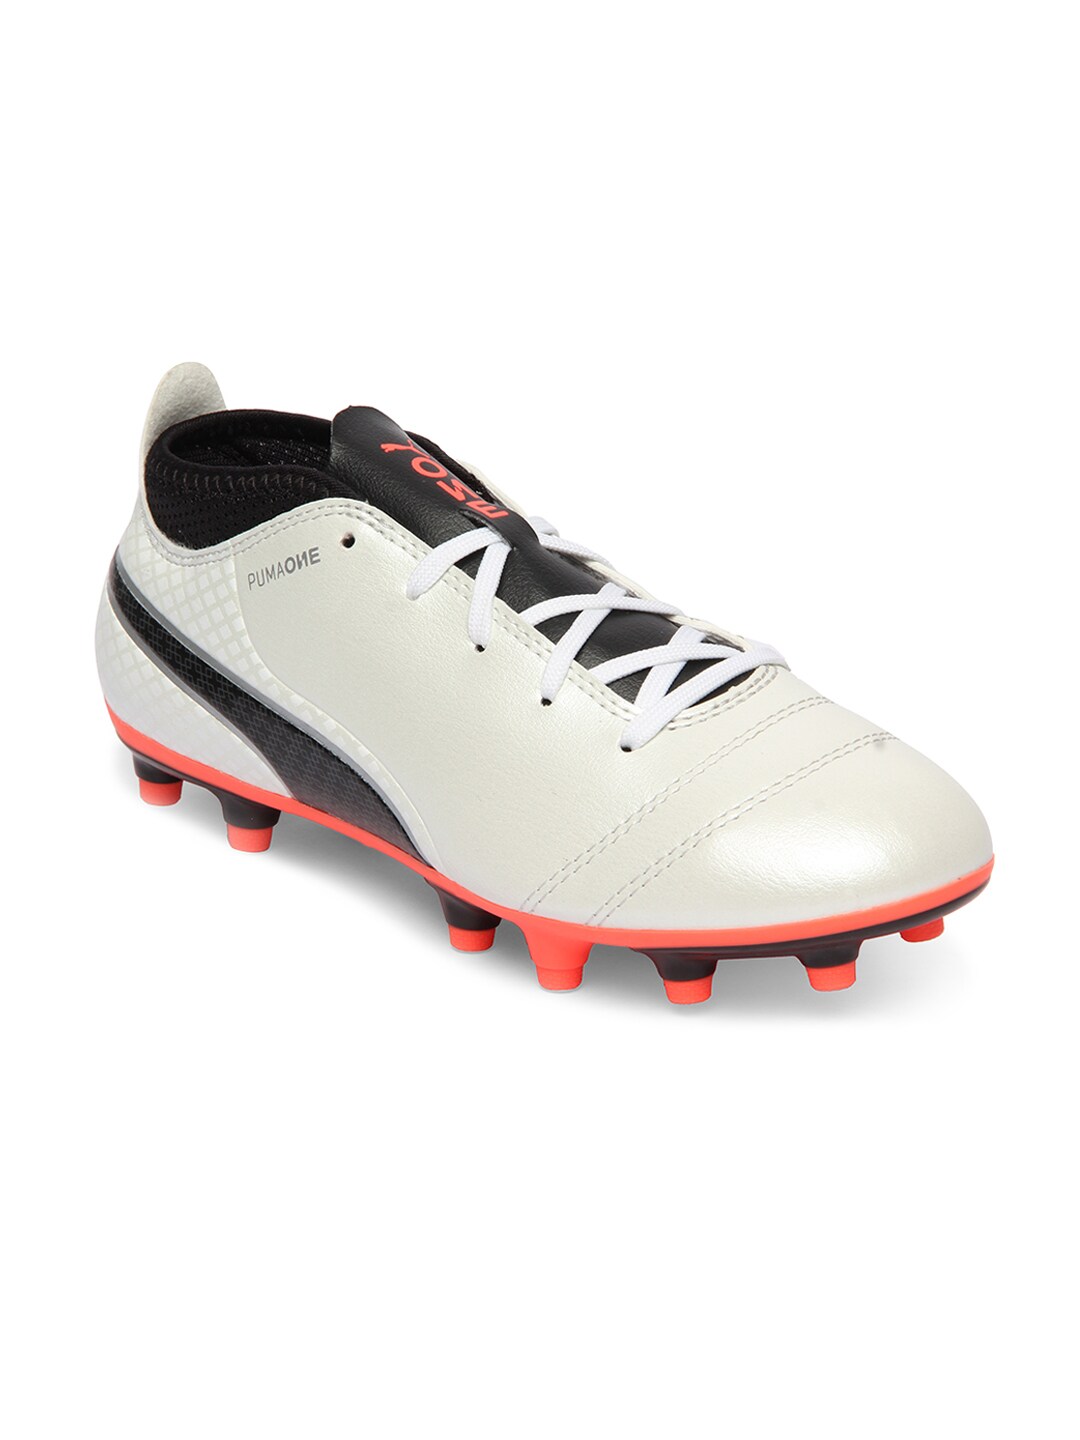 Buy PUMA Puma Unisex White PUMA ONE 17.4 FG Jr Football Shoes at Redfynd